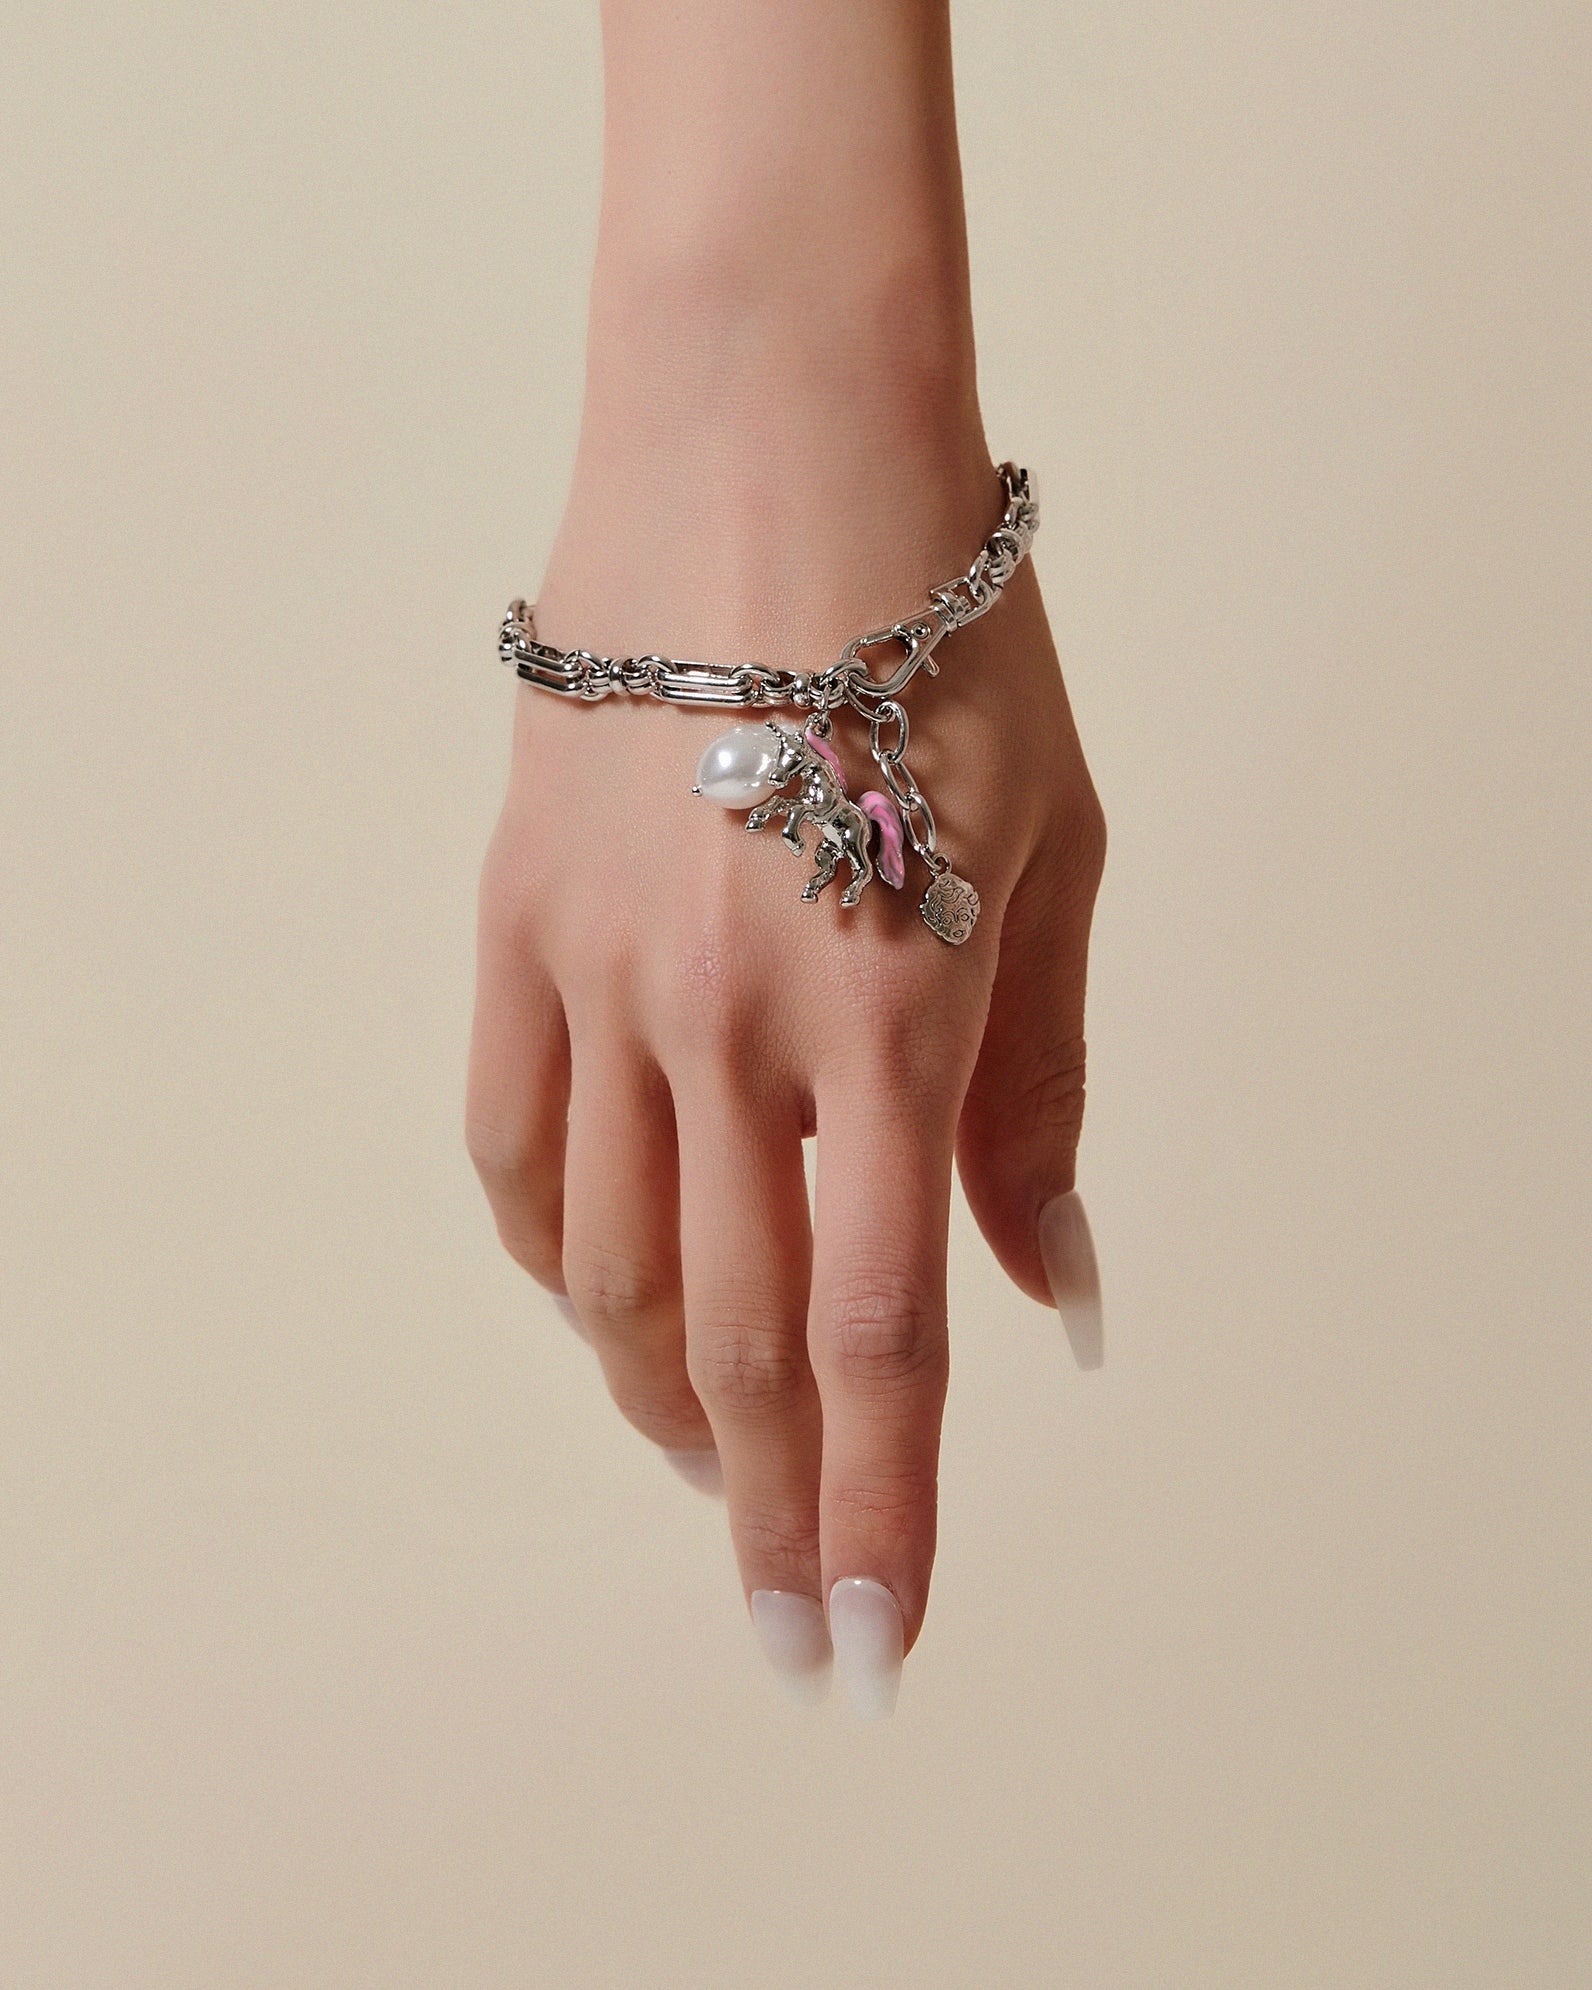 Unicorn Bracelet Unicorn Jewelry Birthday Gift Silicone Beads